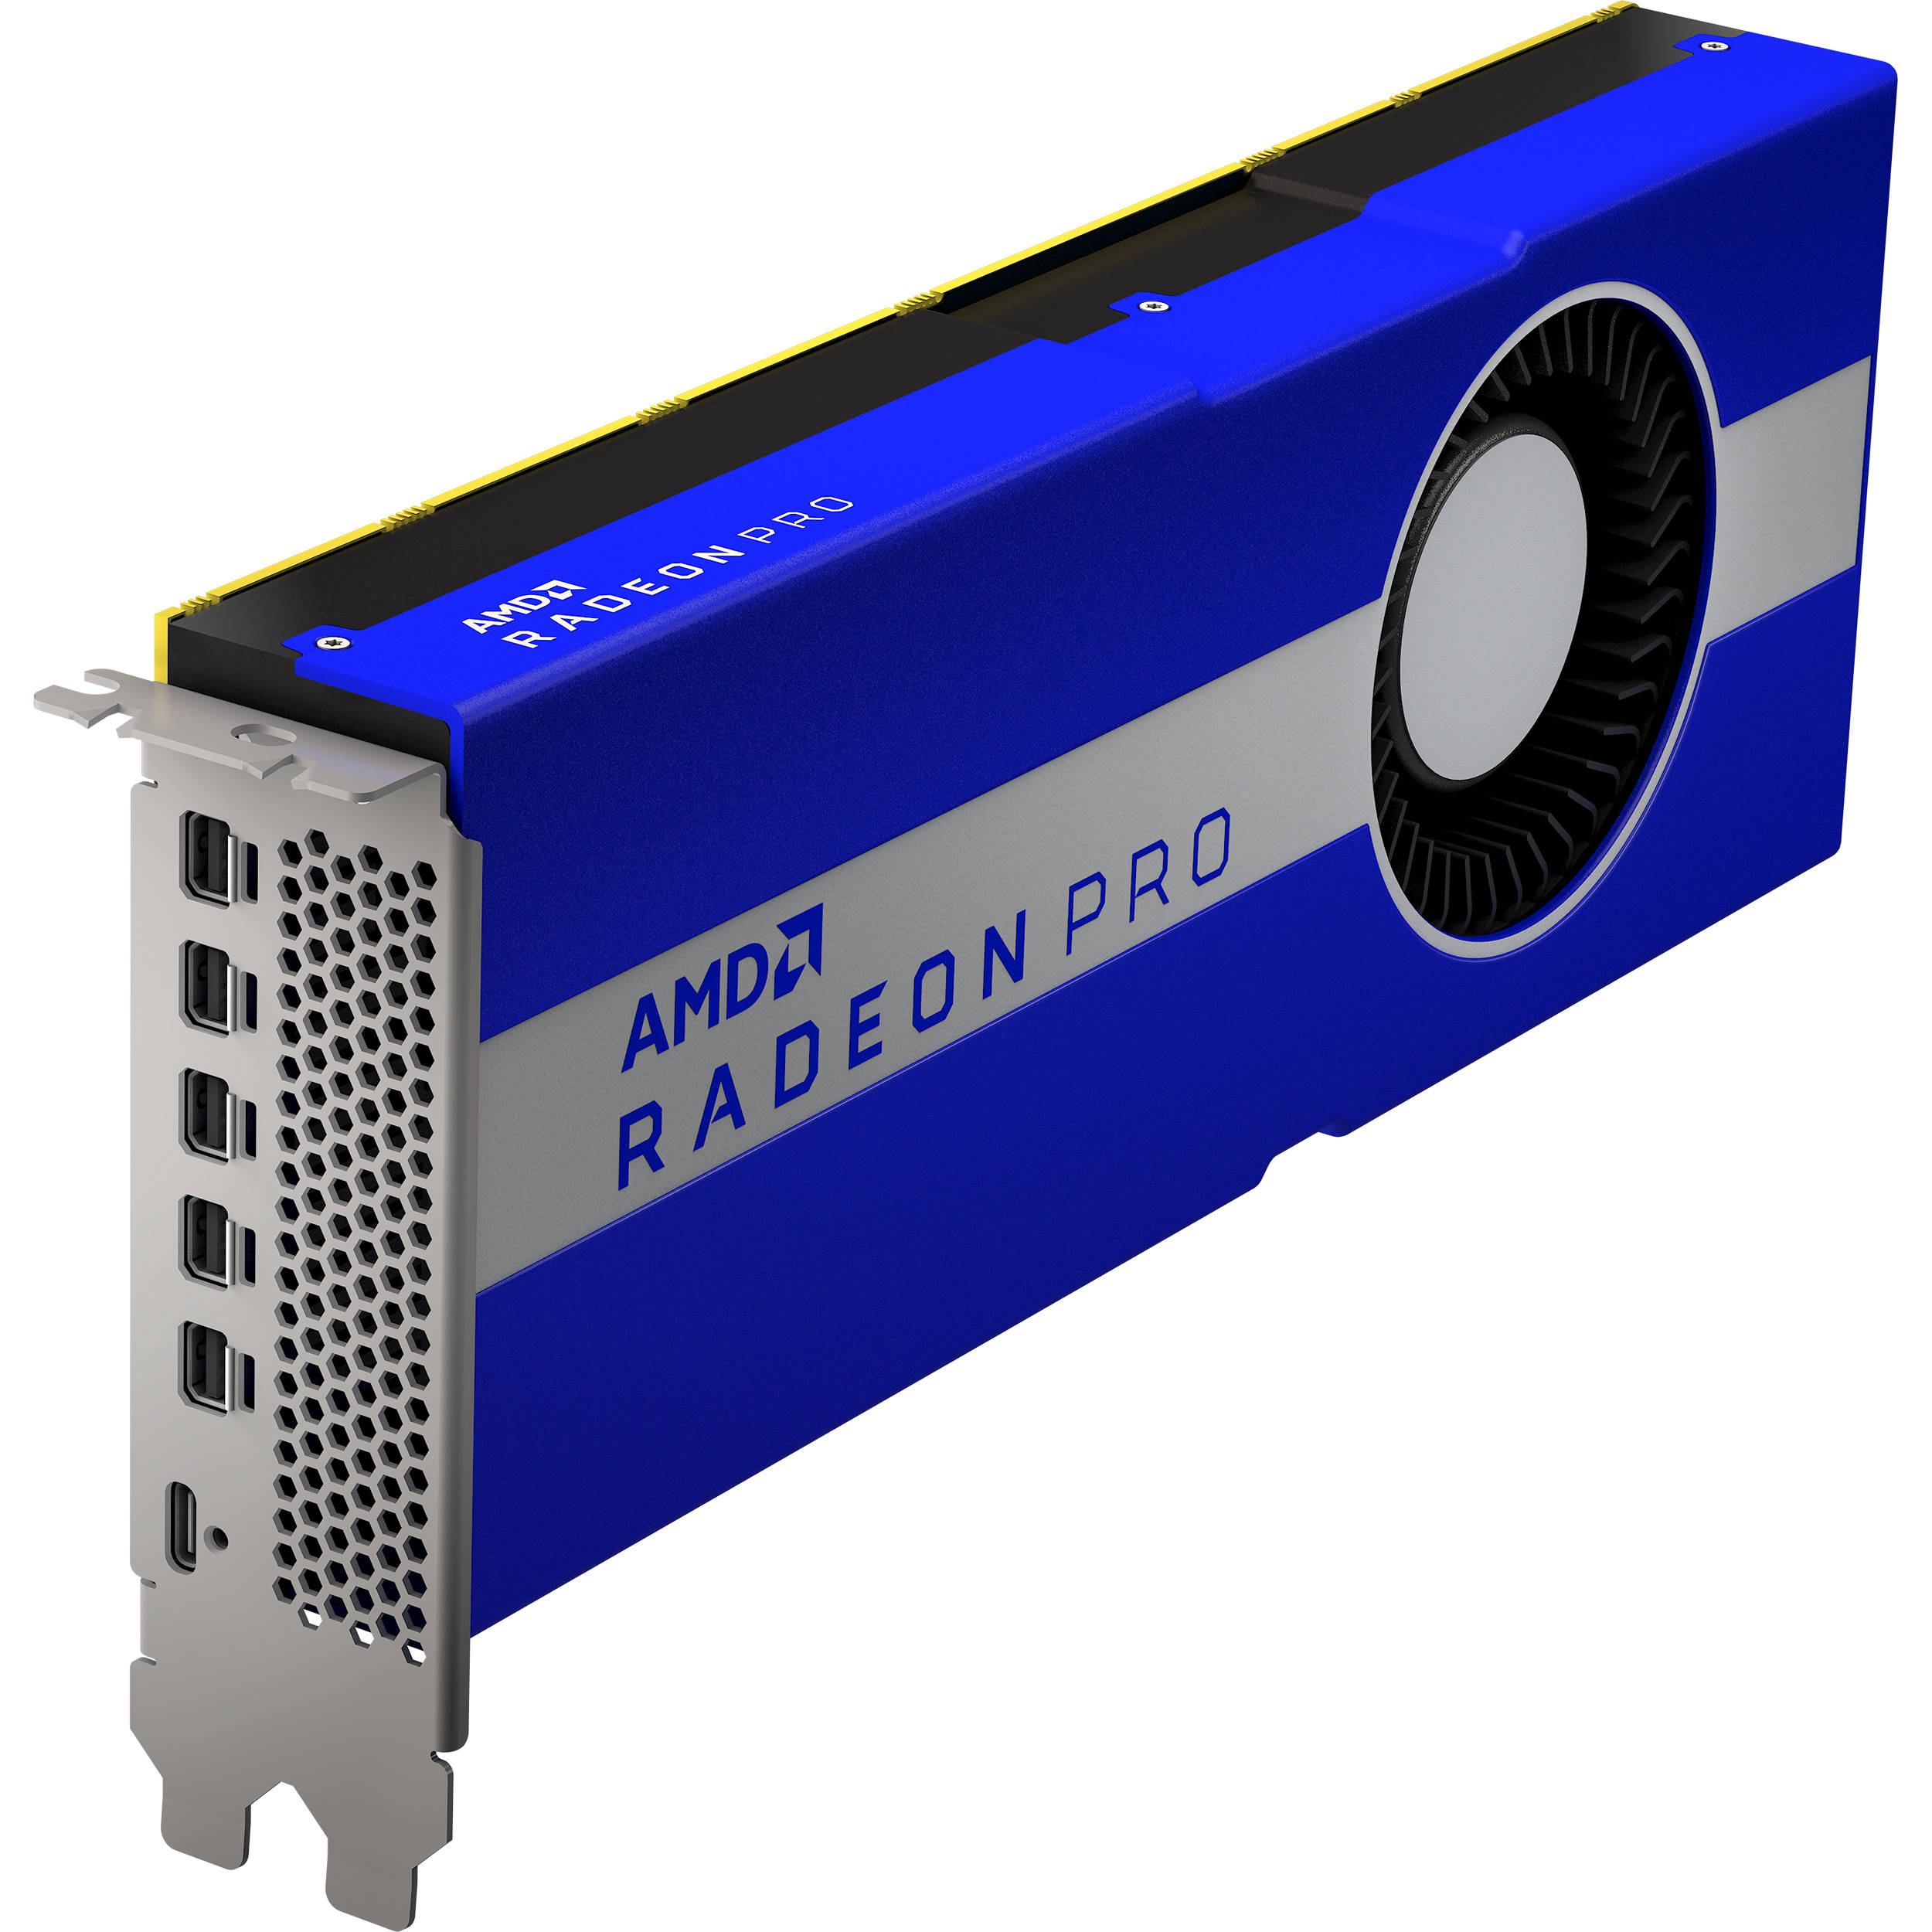 AMD Radeon Pro W5700 Graphics Card 100 